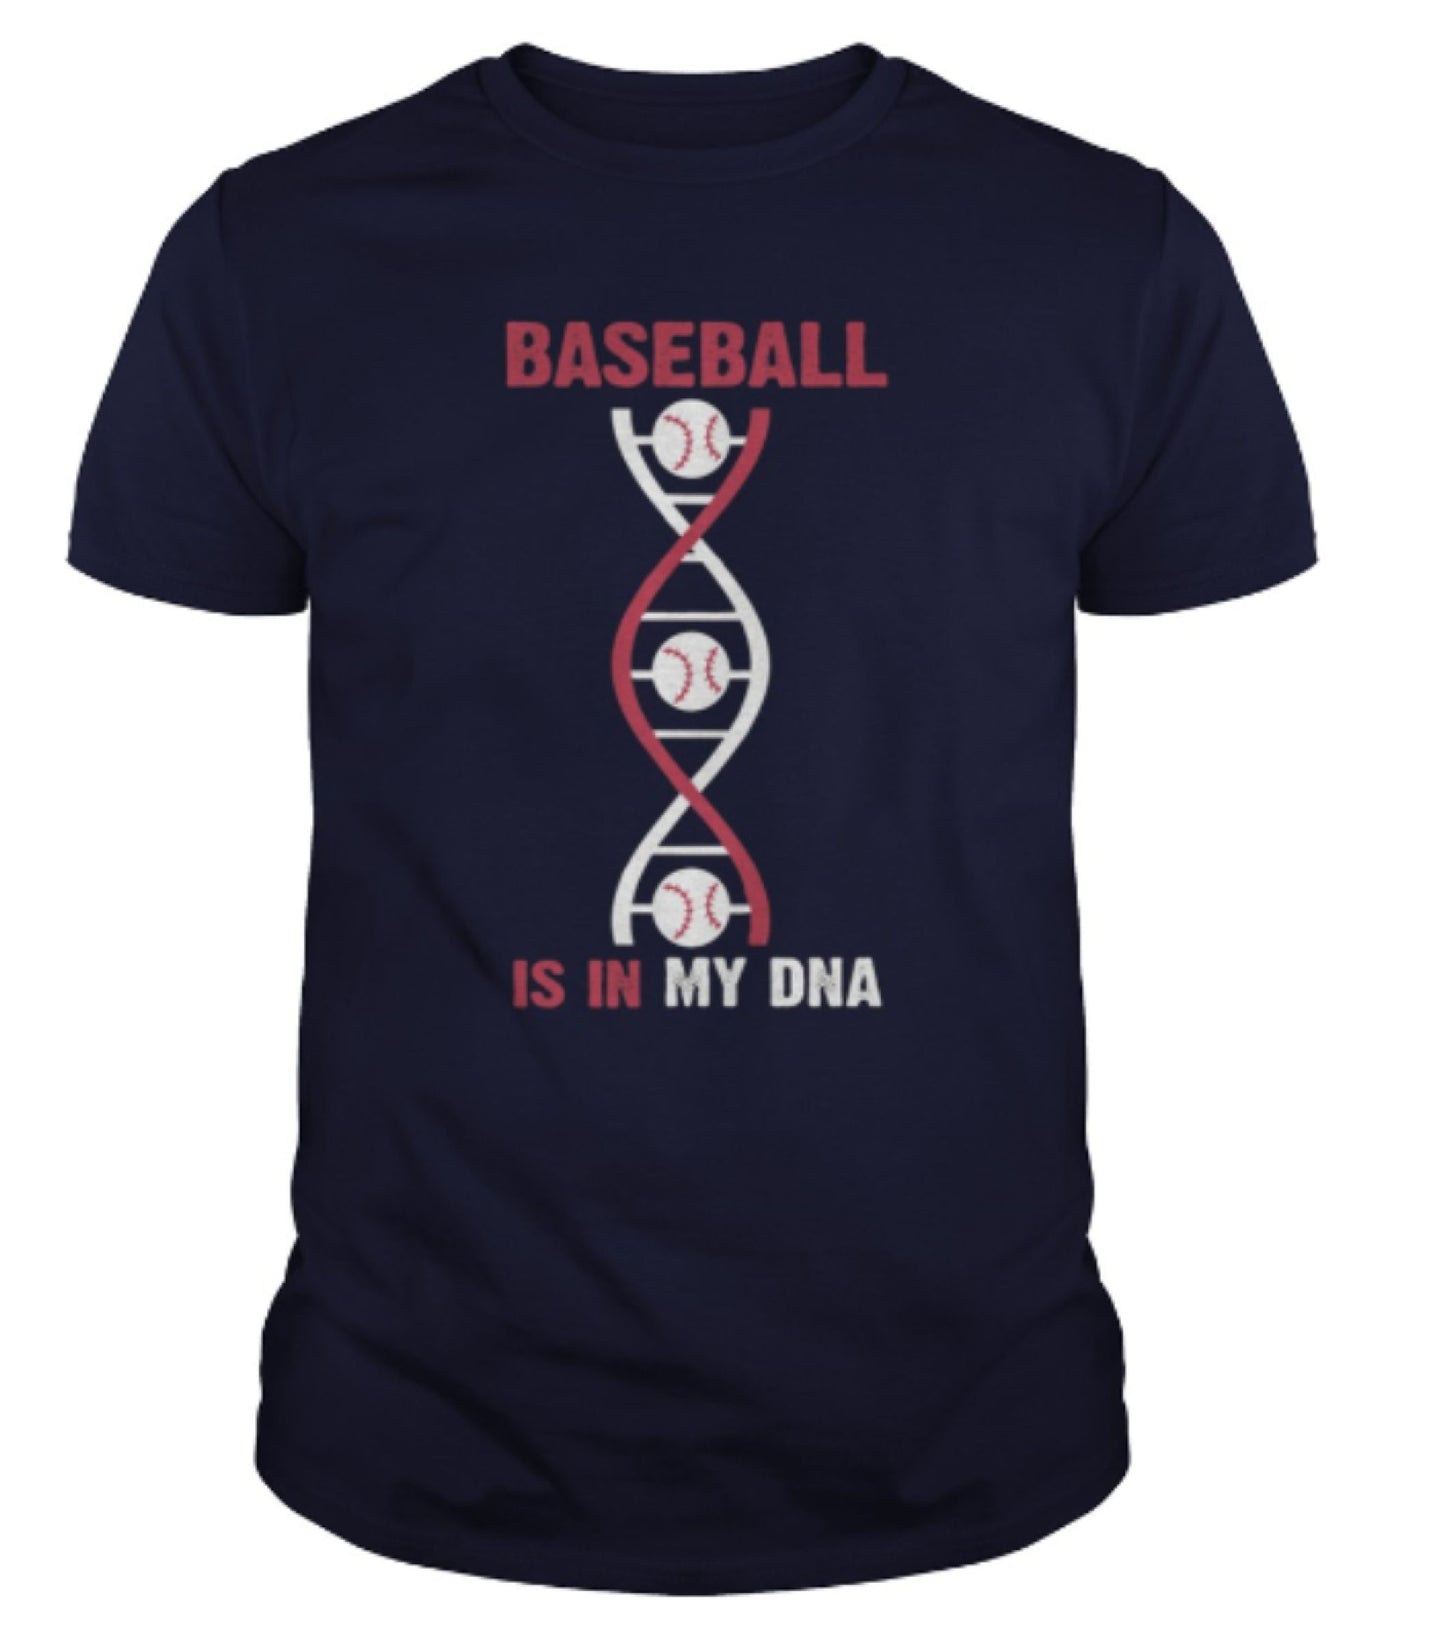 BASEBALL DNA